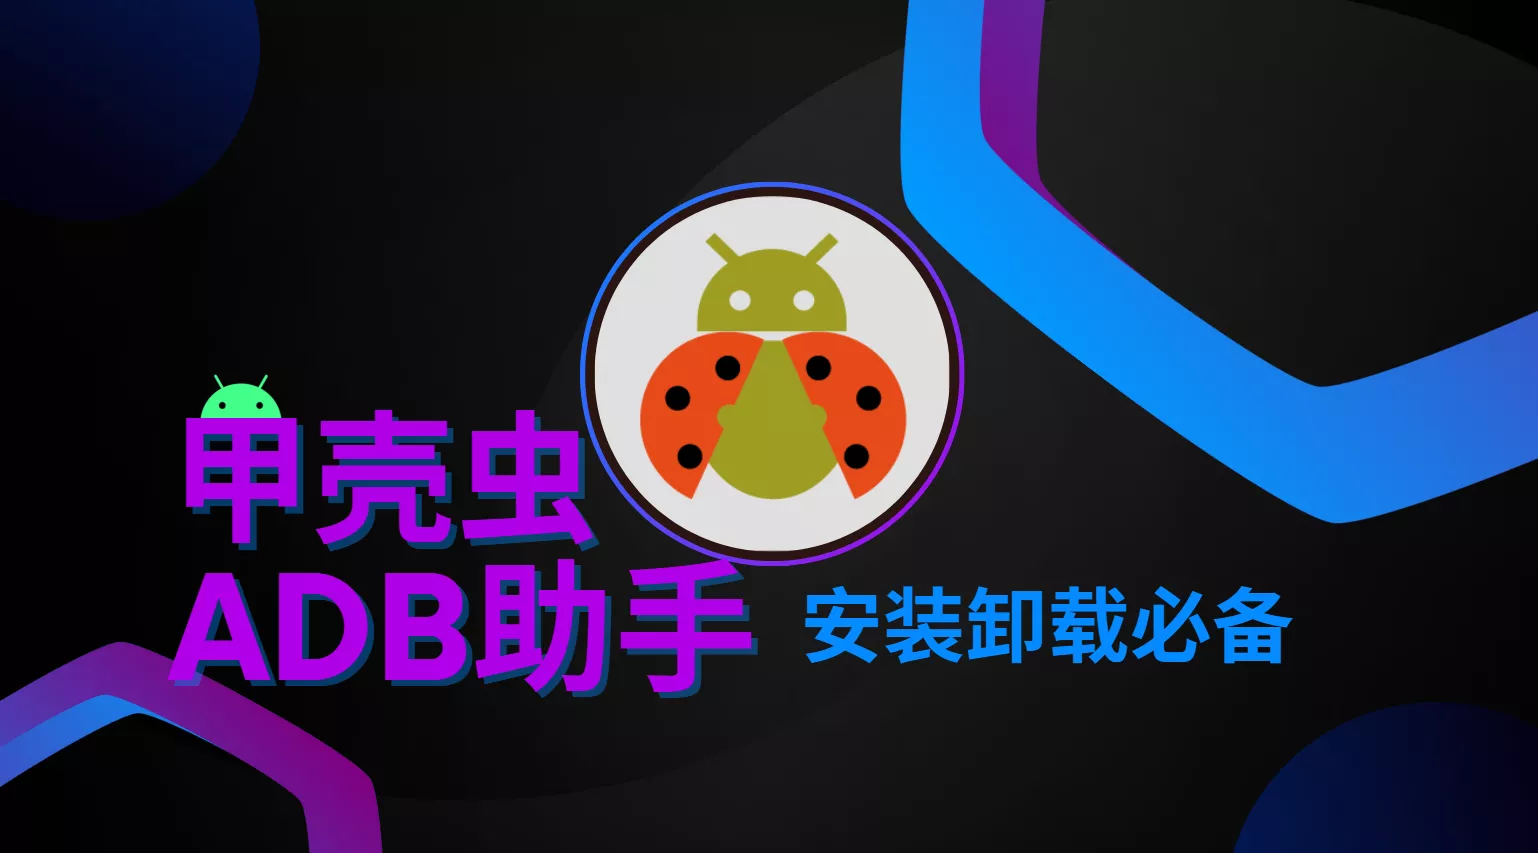 甲壳虫ADB助手Android必备应用 手机 | 车机 | TV |-OMii 